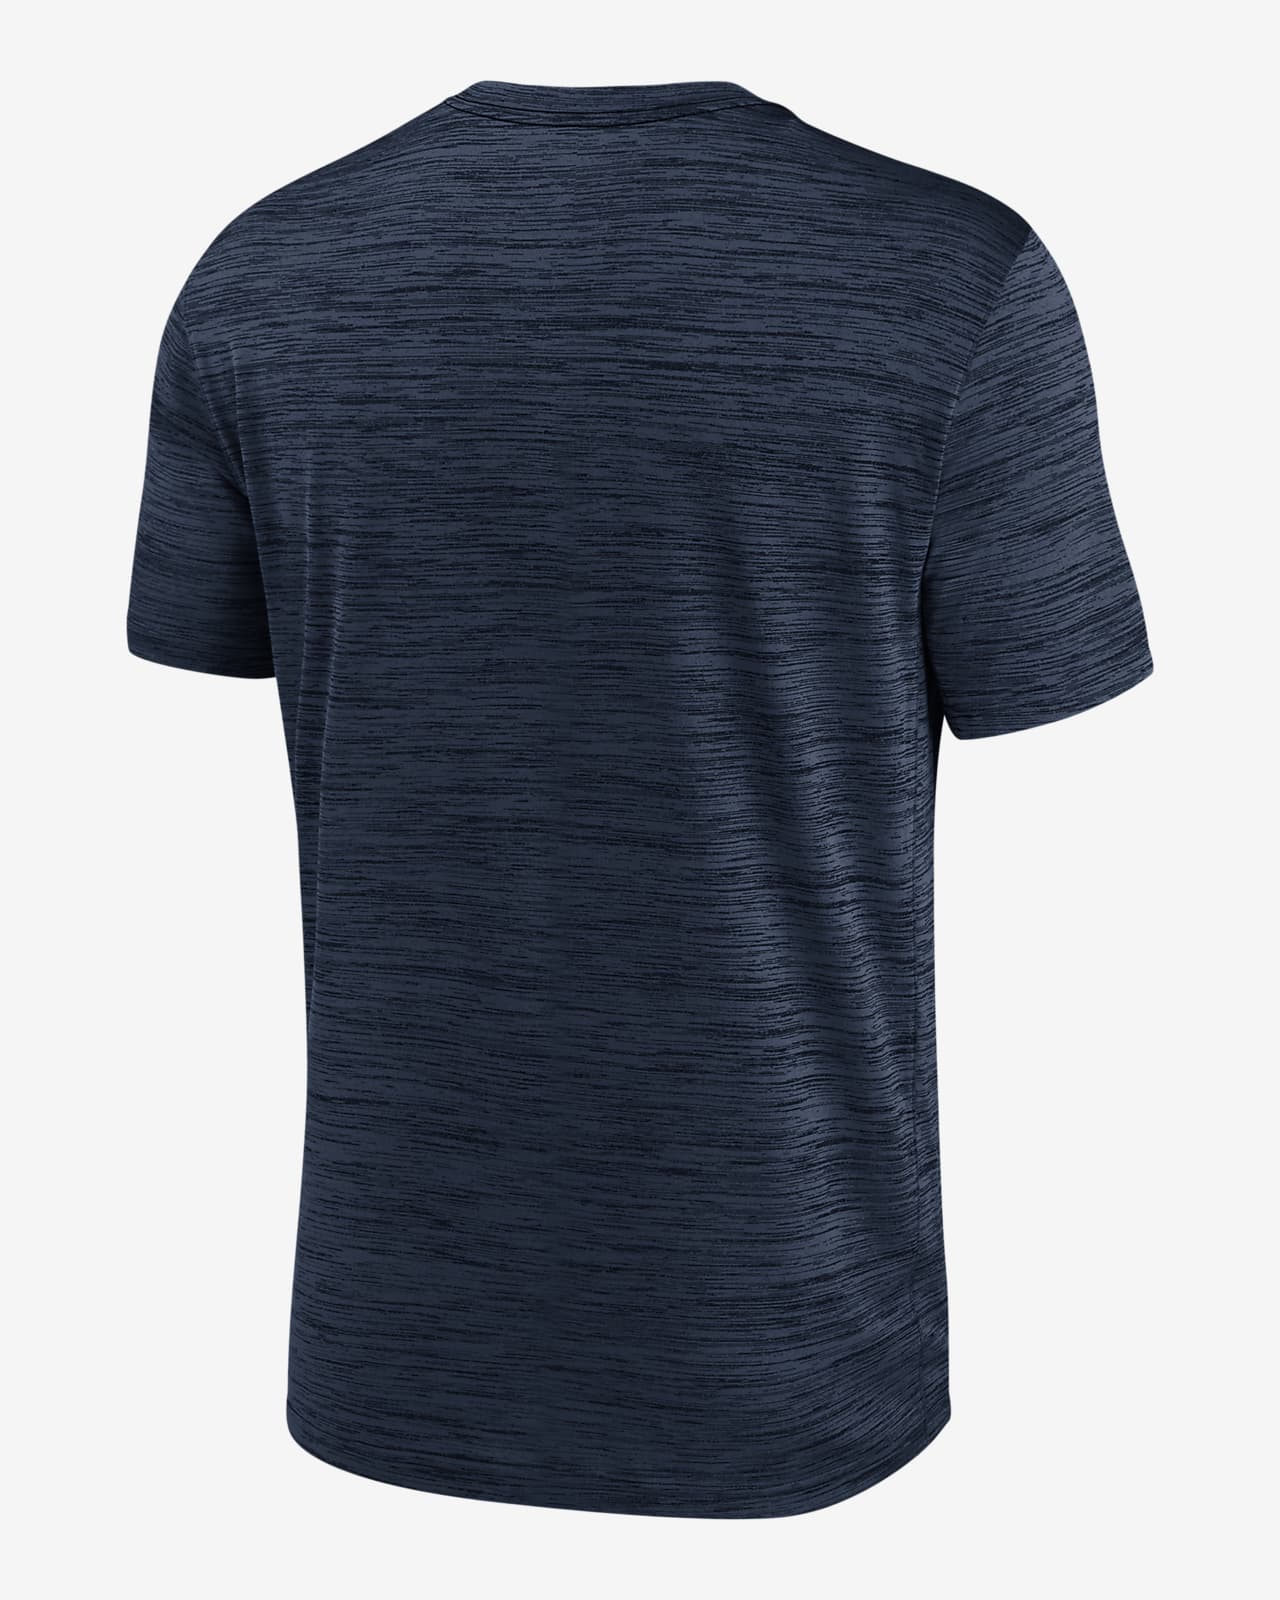 Nike Dri-FIT City Connect Logo (MLB Houston Astros) Men's T-Shirt.